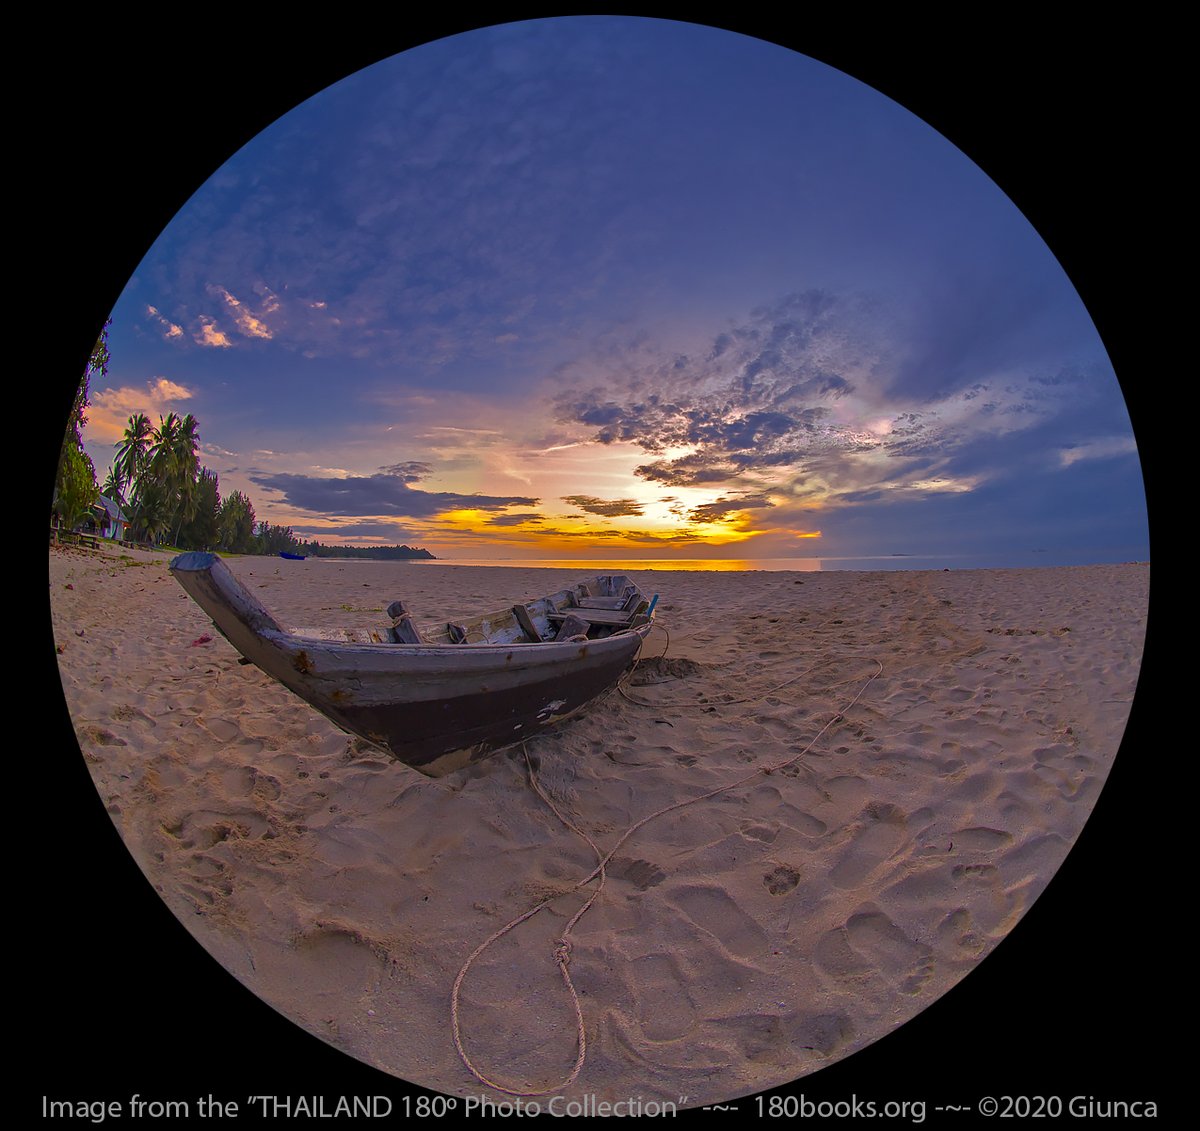 #Top4Theme  #Top4Beaches Share your pics, retweet & tag hosts @obligatraveler @jollyhobos @ararewoman
@intheolivegrov1 Beaches in #IncredibleIndia #Thailand